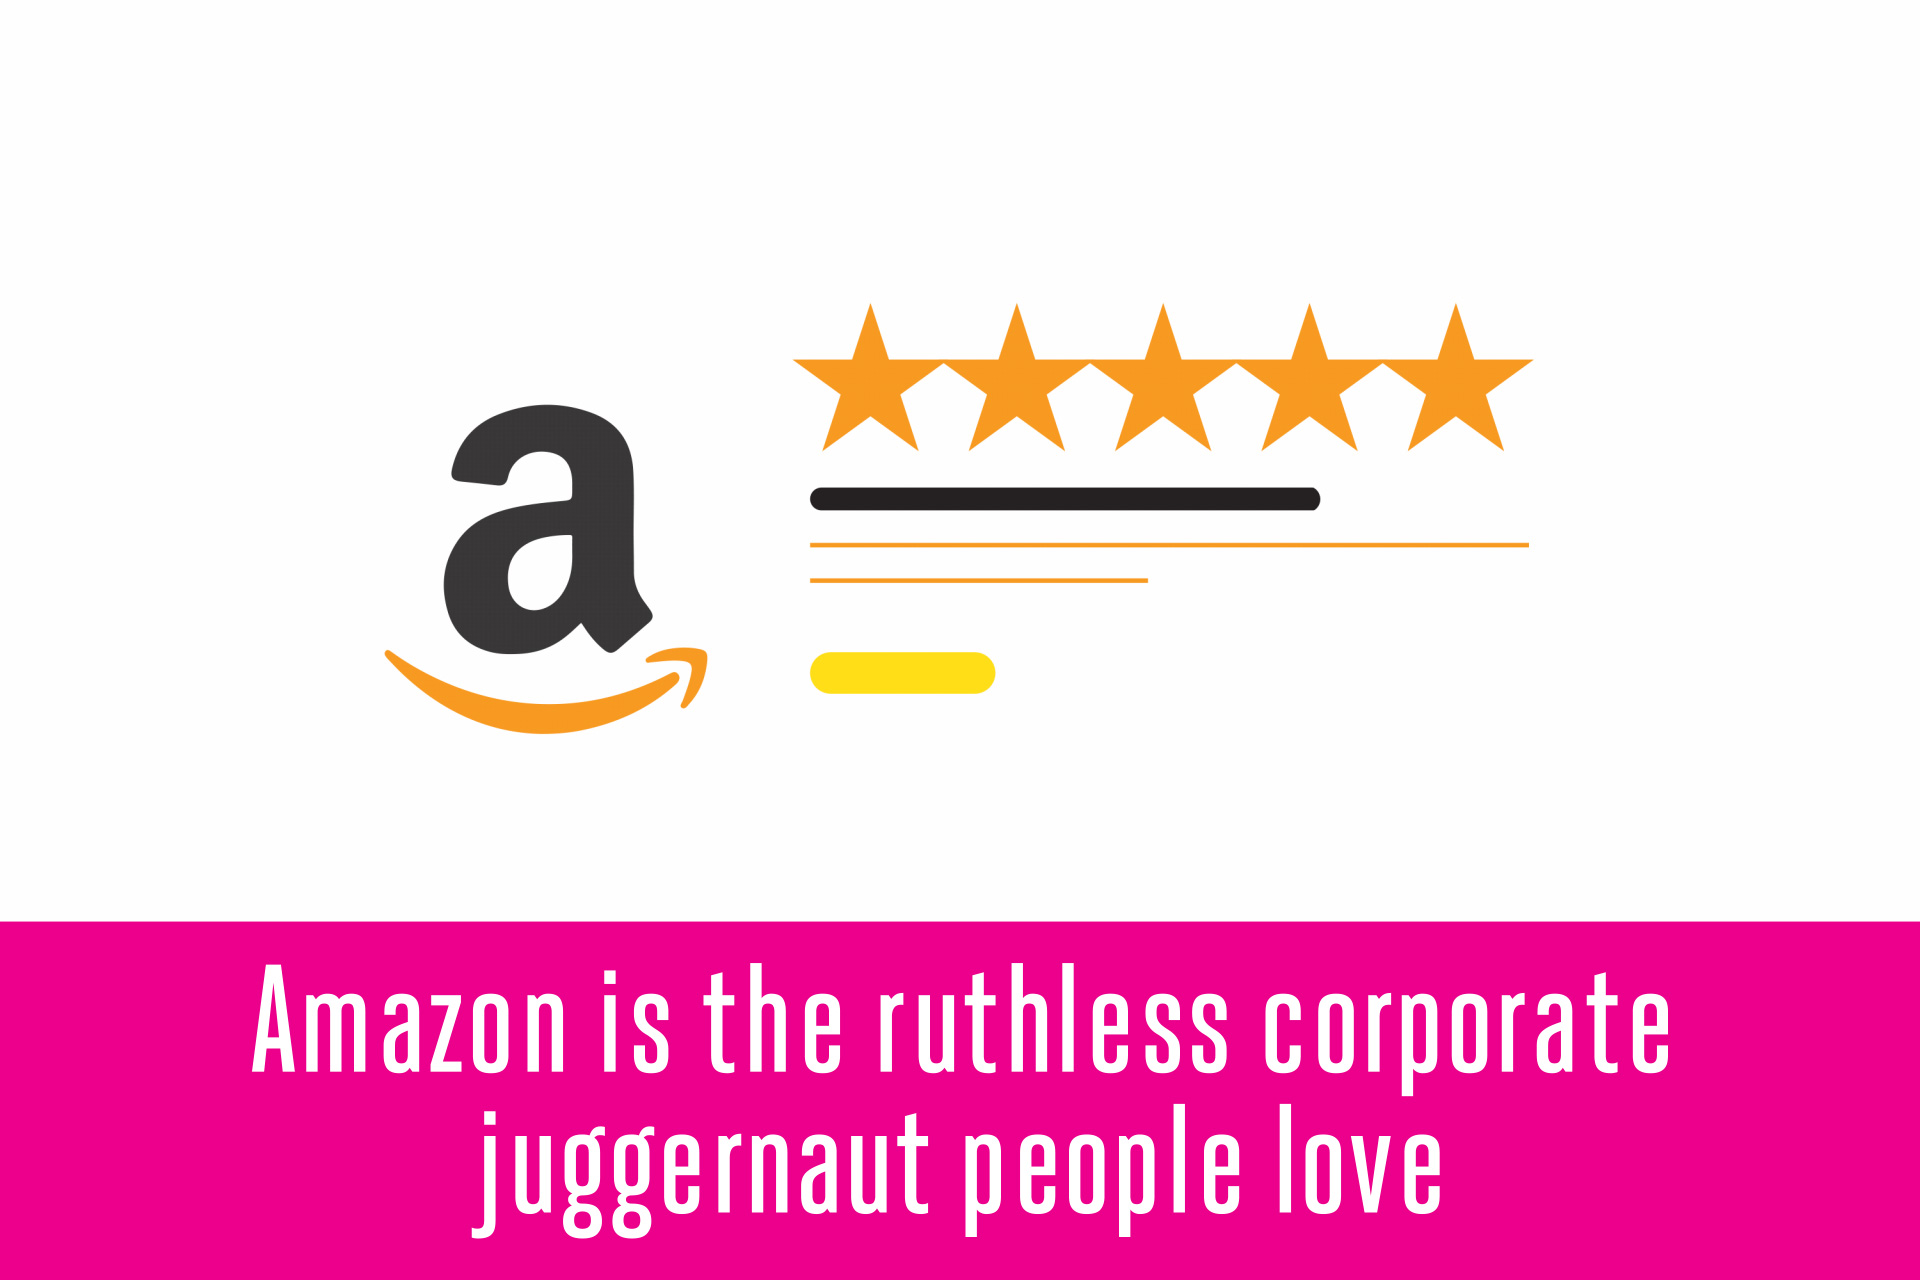 Amazon is the ruthless corporate juggernaut people love